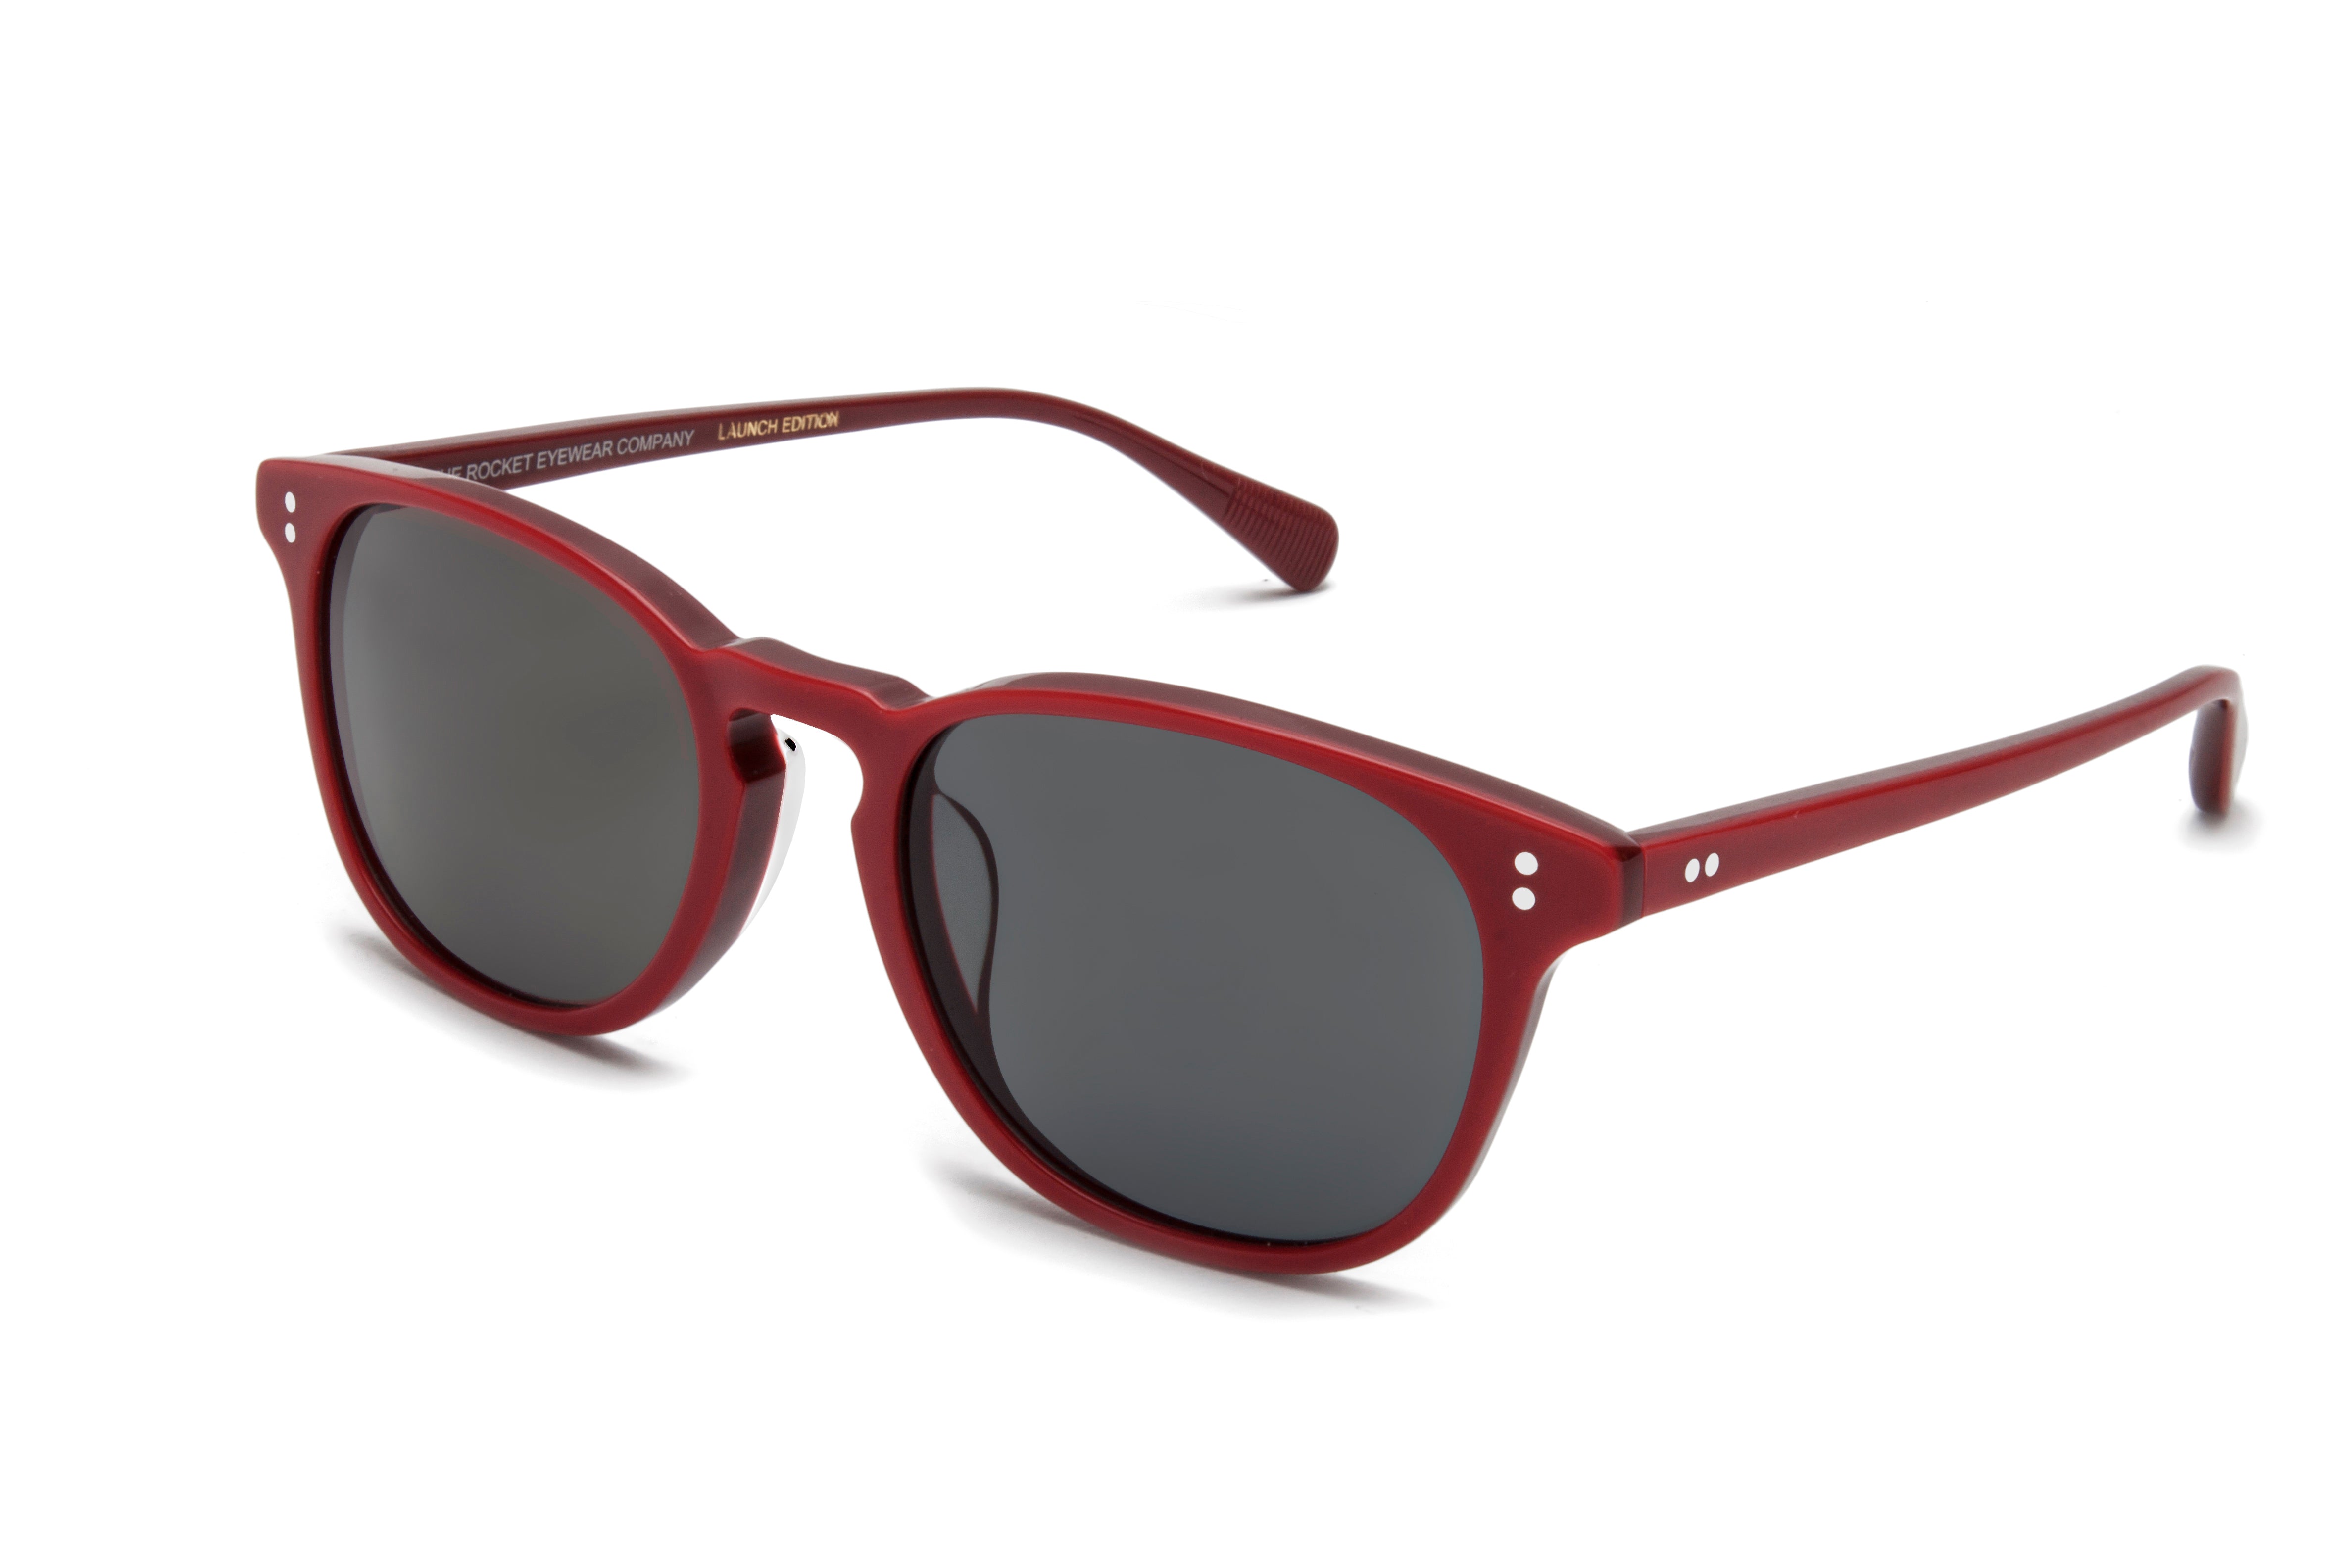 Rocket Eyewear Company P3 Classic Sunglasses Carmine Rosewood with Grey polarized lenses